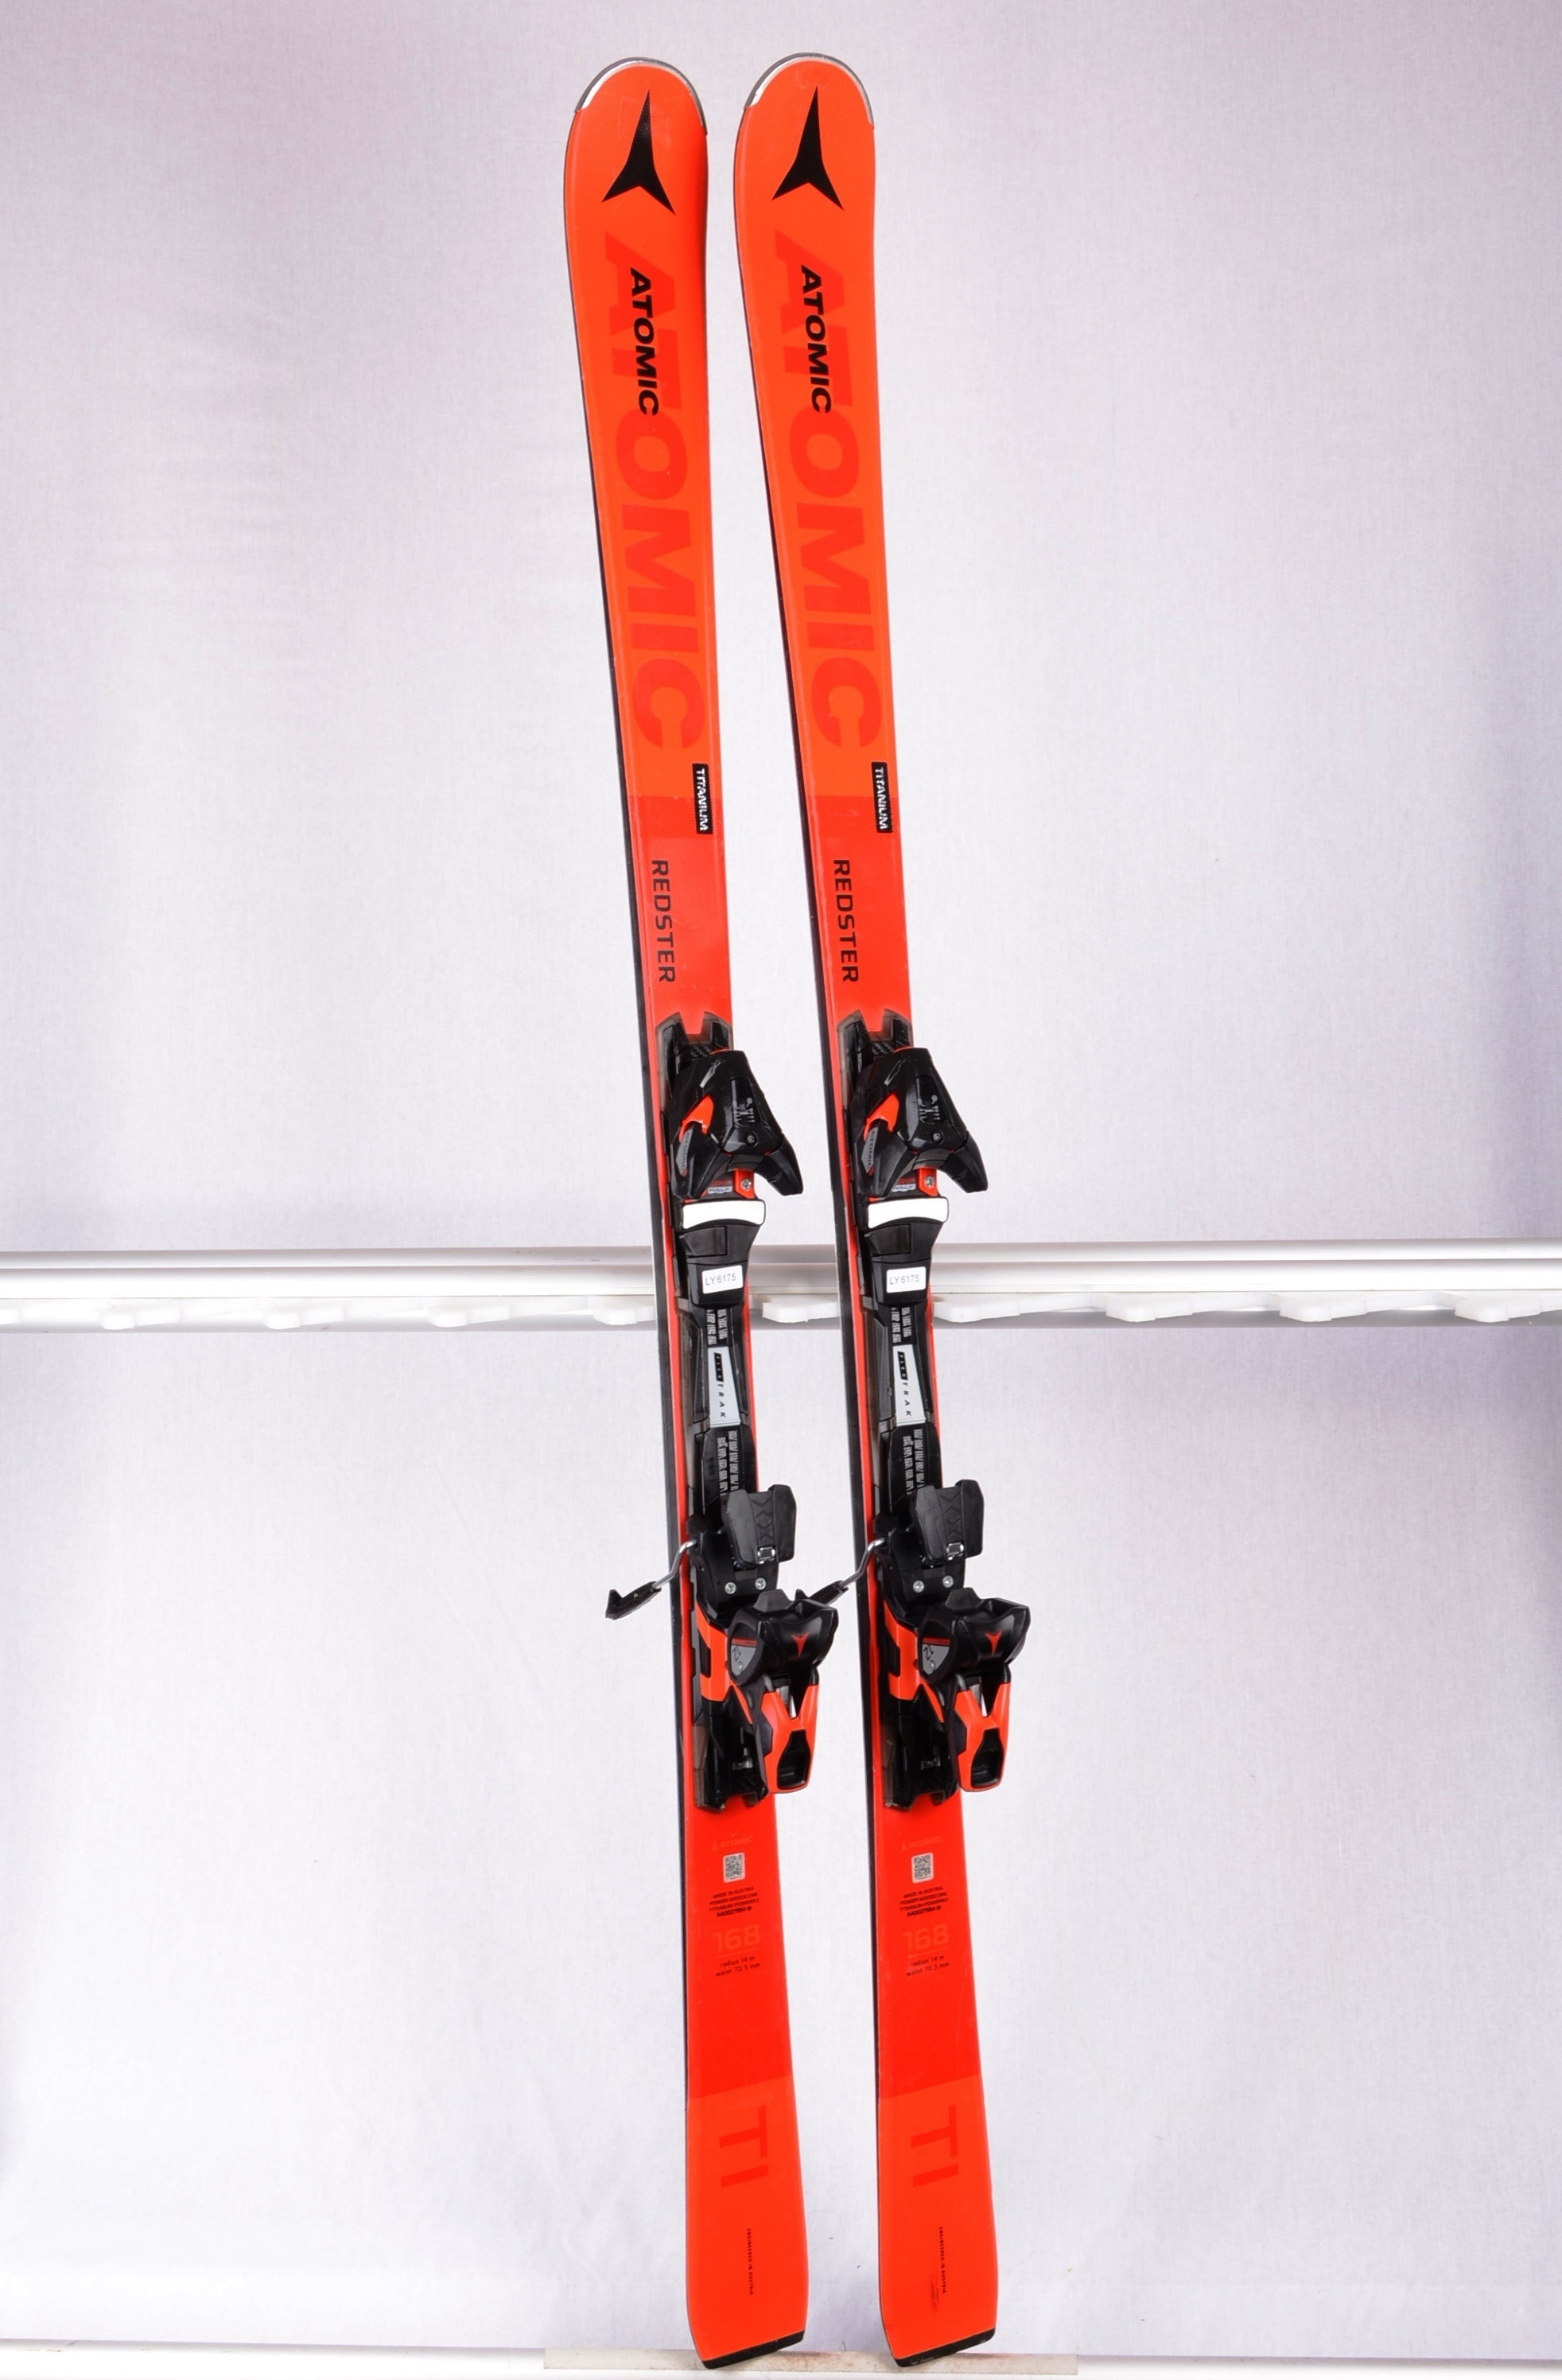 skis REDSTER Ti 2020 TITANIUM, grip Woodcore + Atomic FT 12 TOP condition ) Mardosport.com